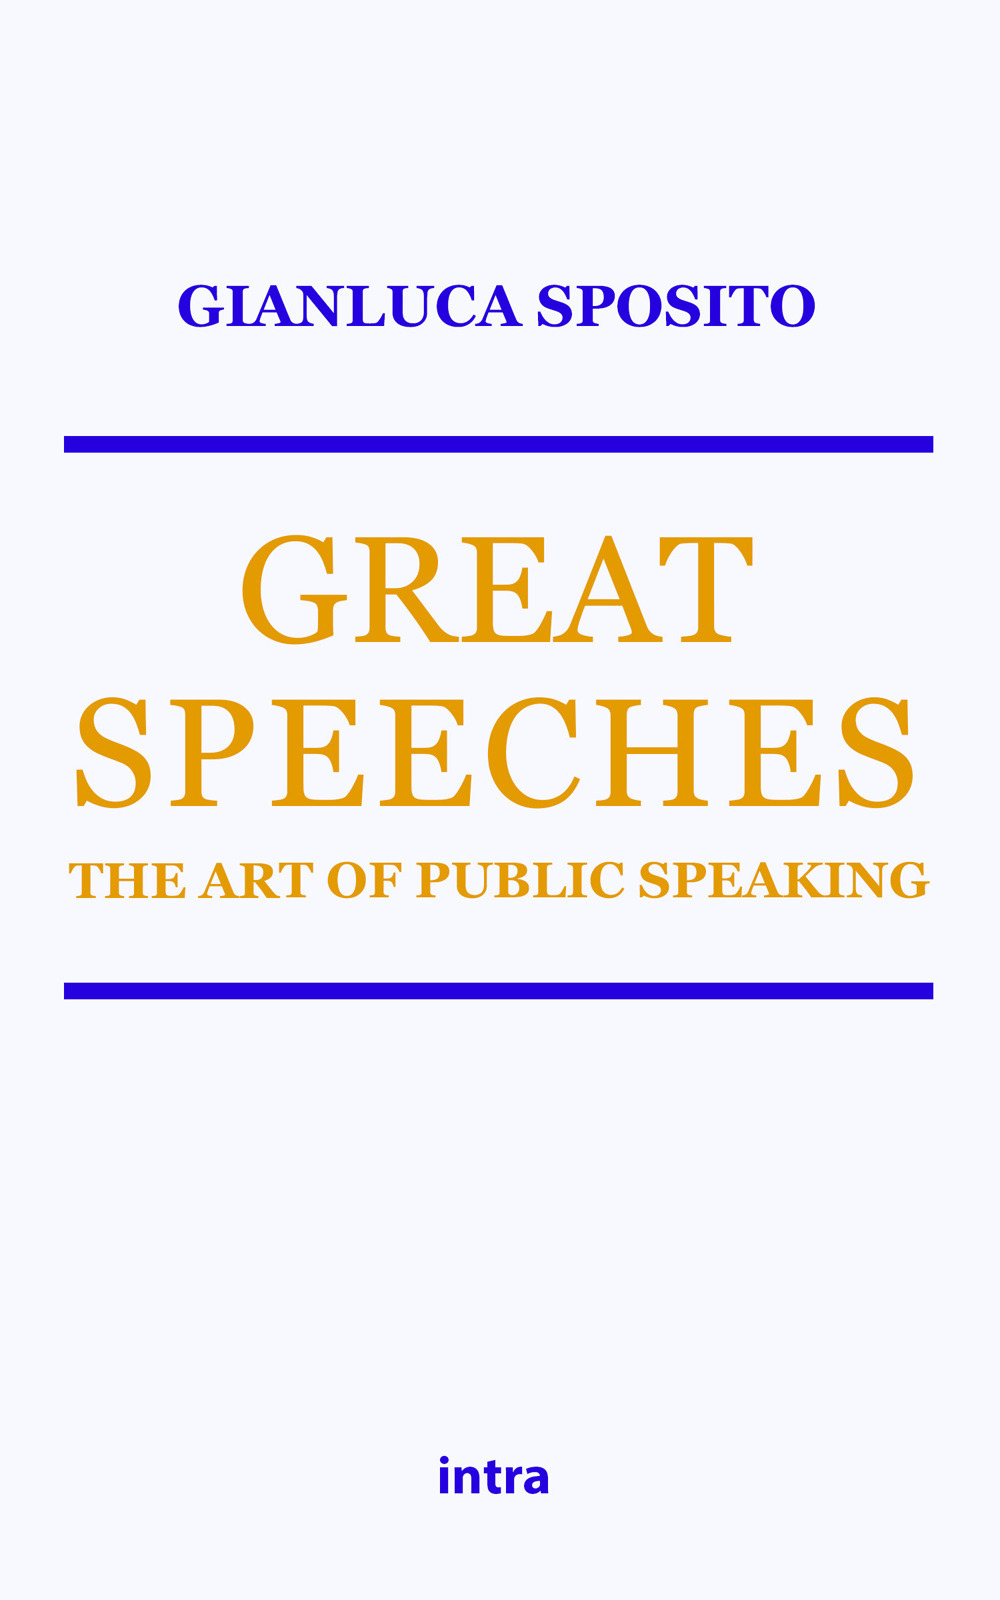 Great speeches. The art of public speaking